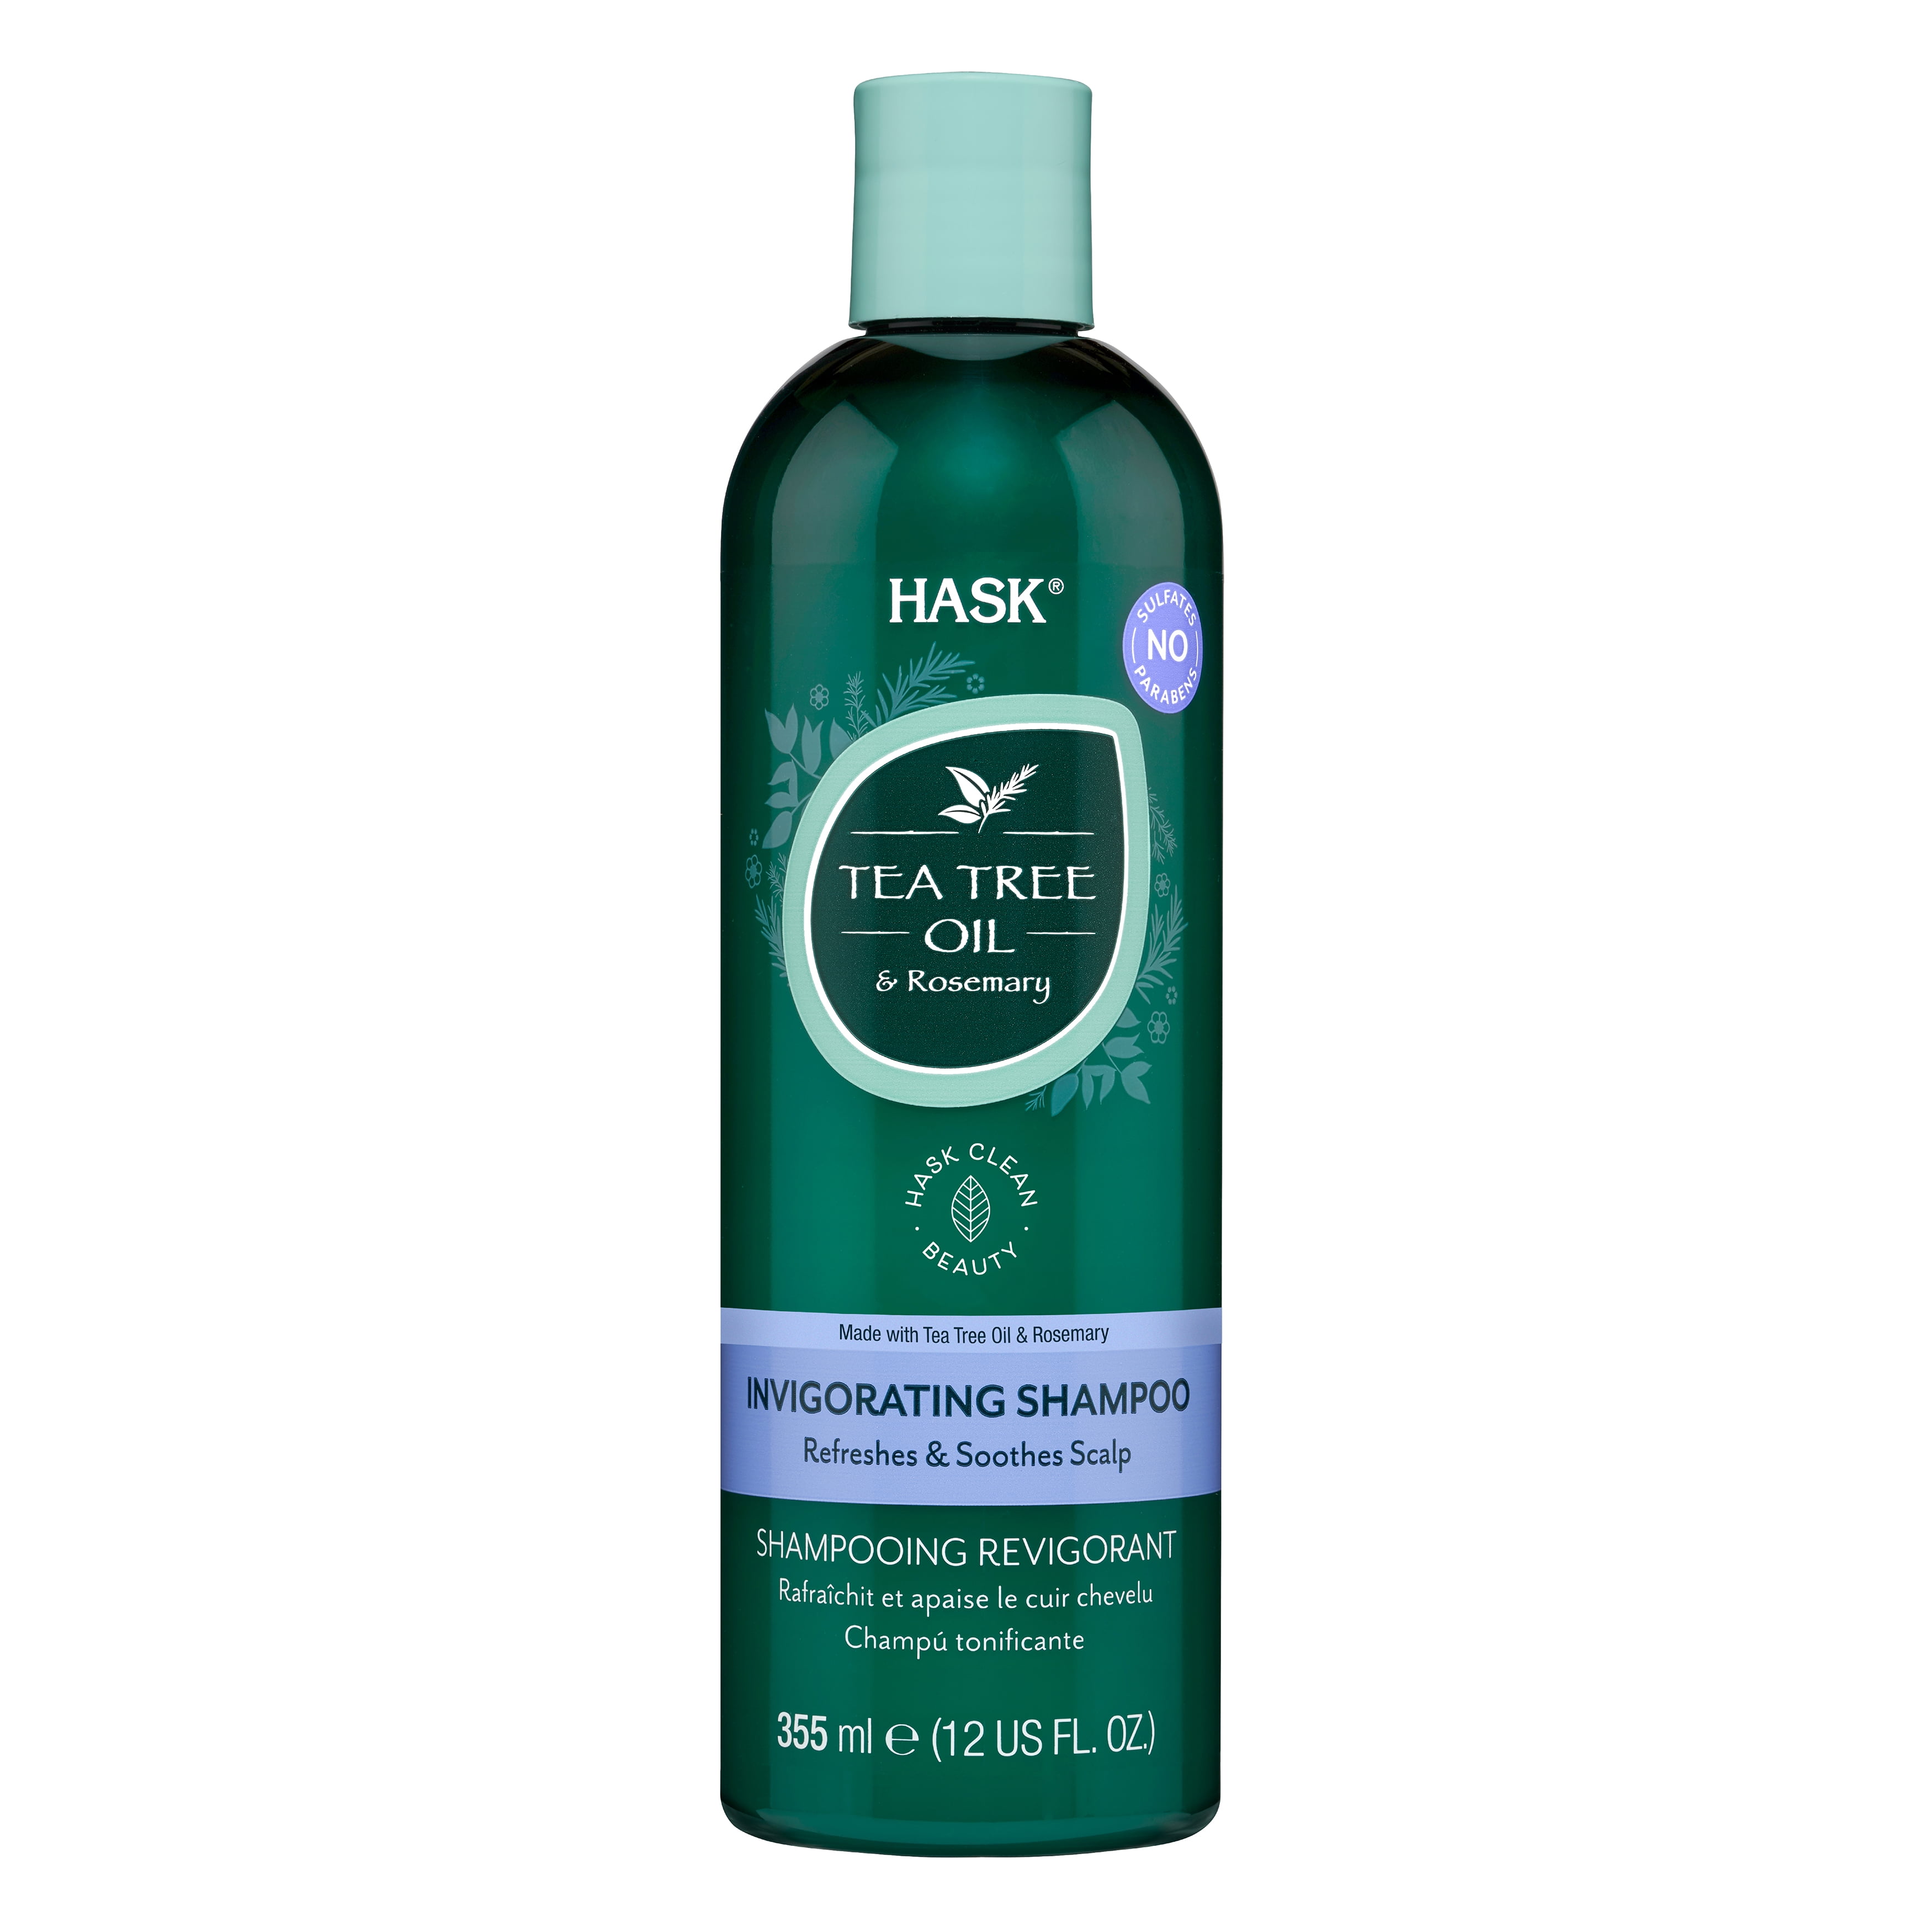 Hask Tea Tree Oil & Rosemary Nourishing Shampoo with Refreshing Herbal Scent, 12 oz - Walmart.com